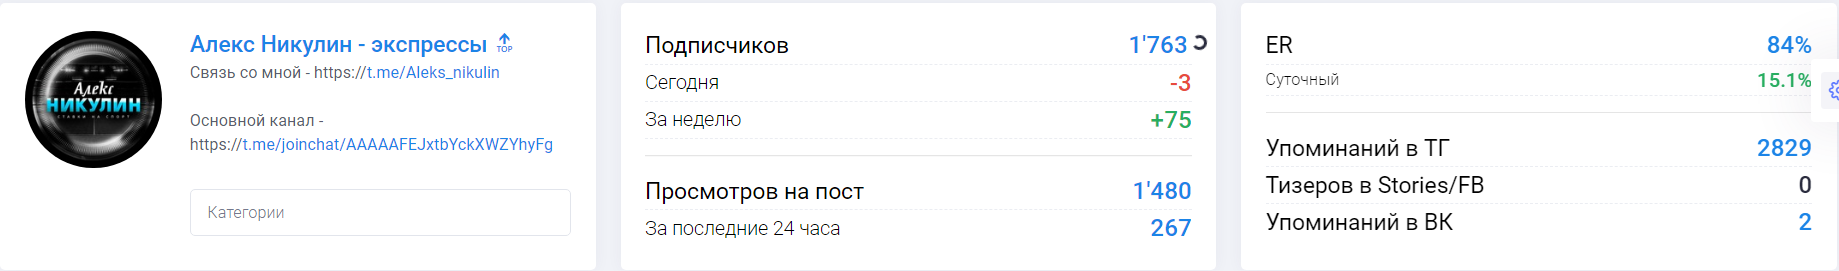 Процент активности канала "Алекс Никулин - экспрессы"